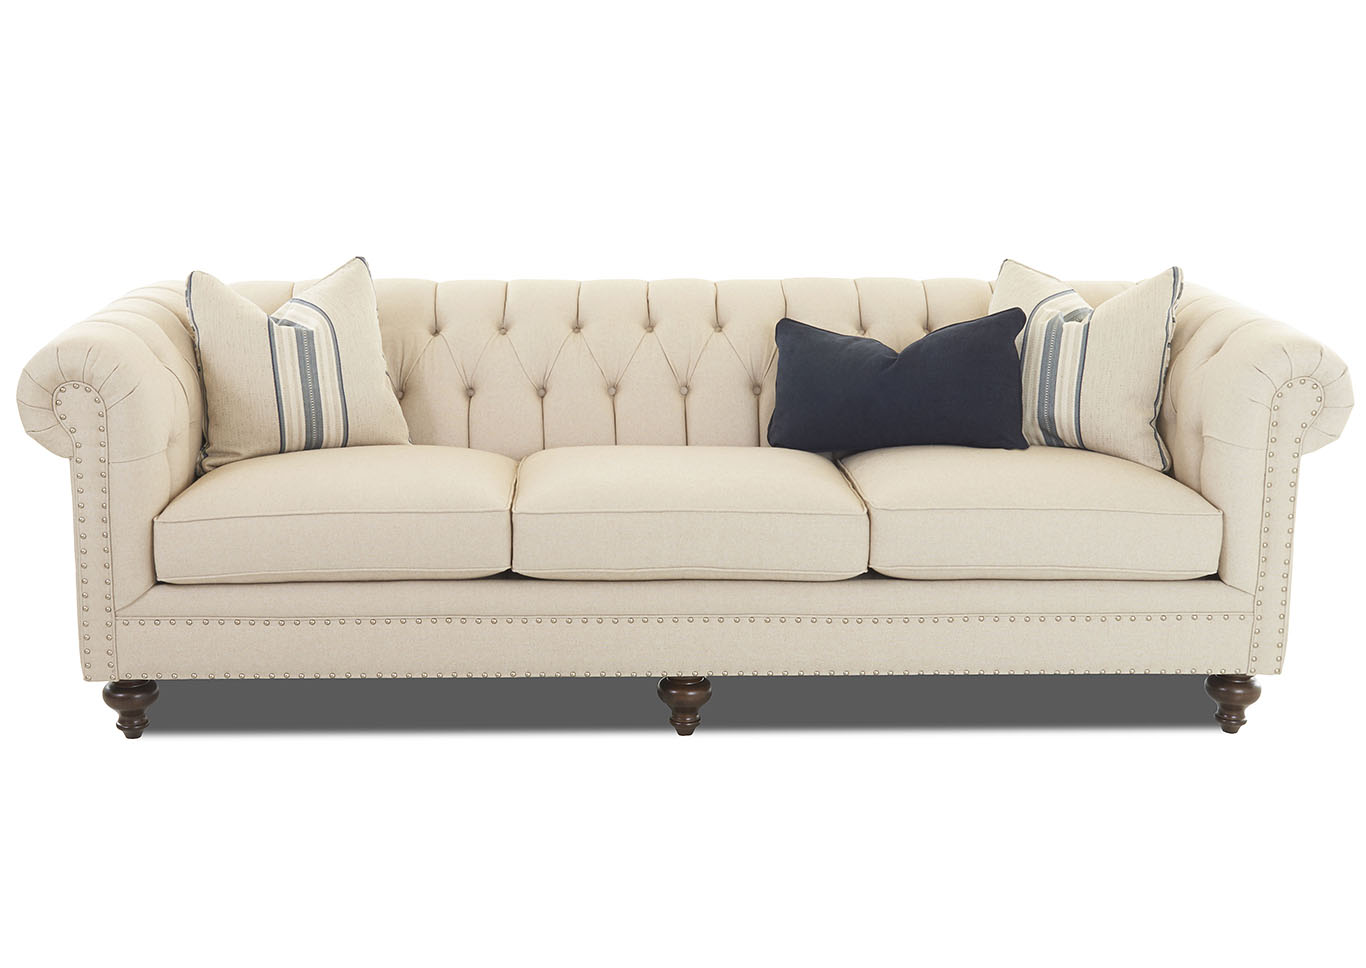 Charlotte Emma Beige Stationary Fabric Sofa,Klaussner Home Furnishings